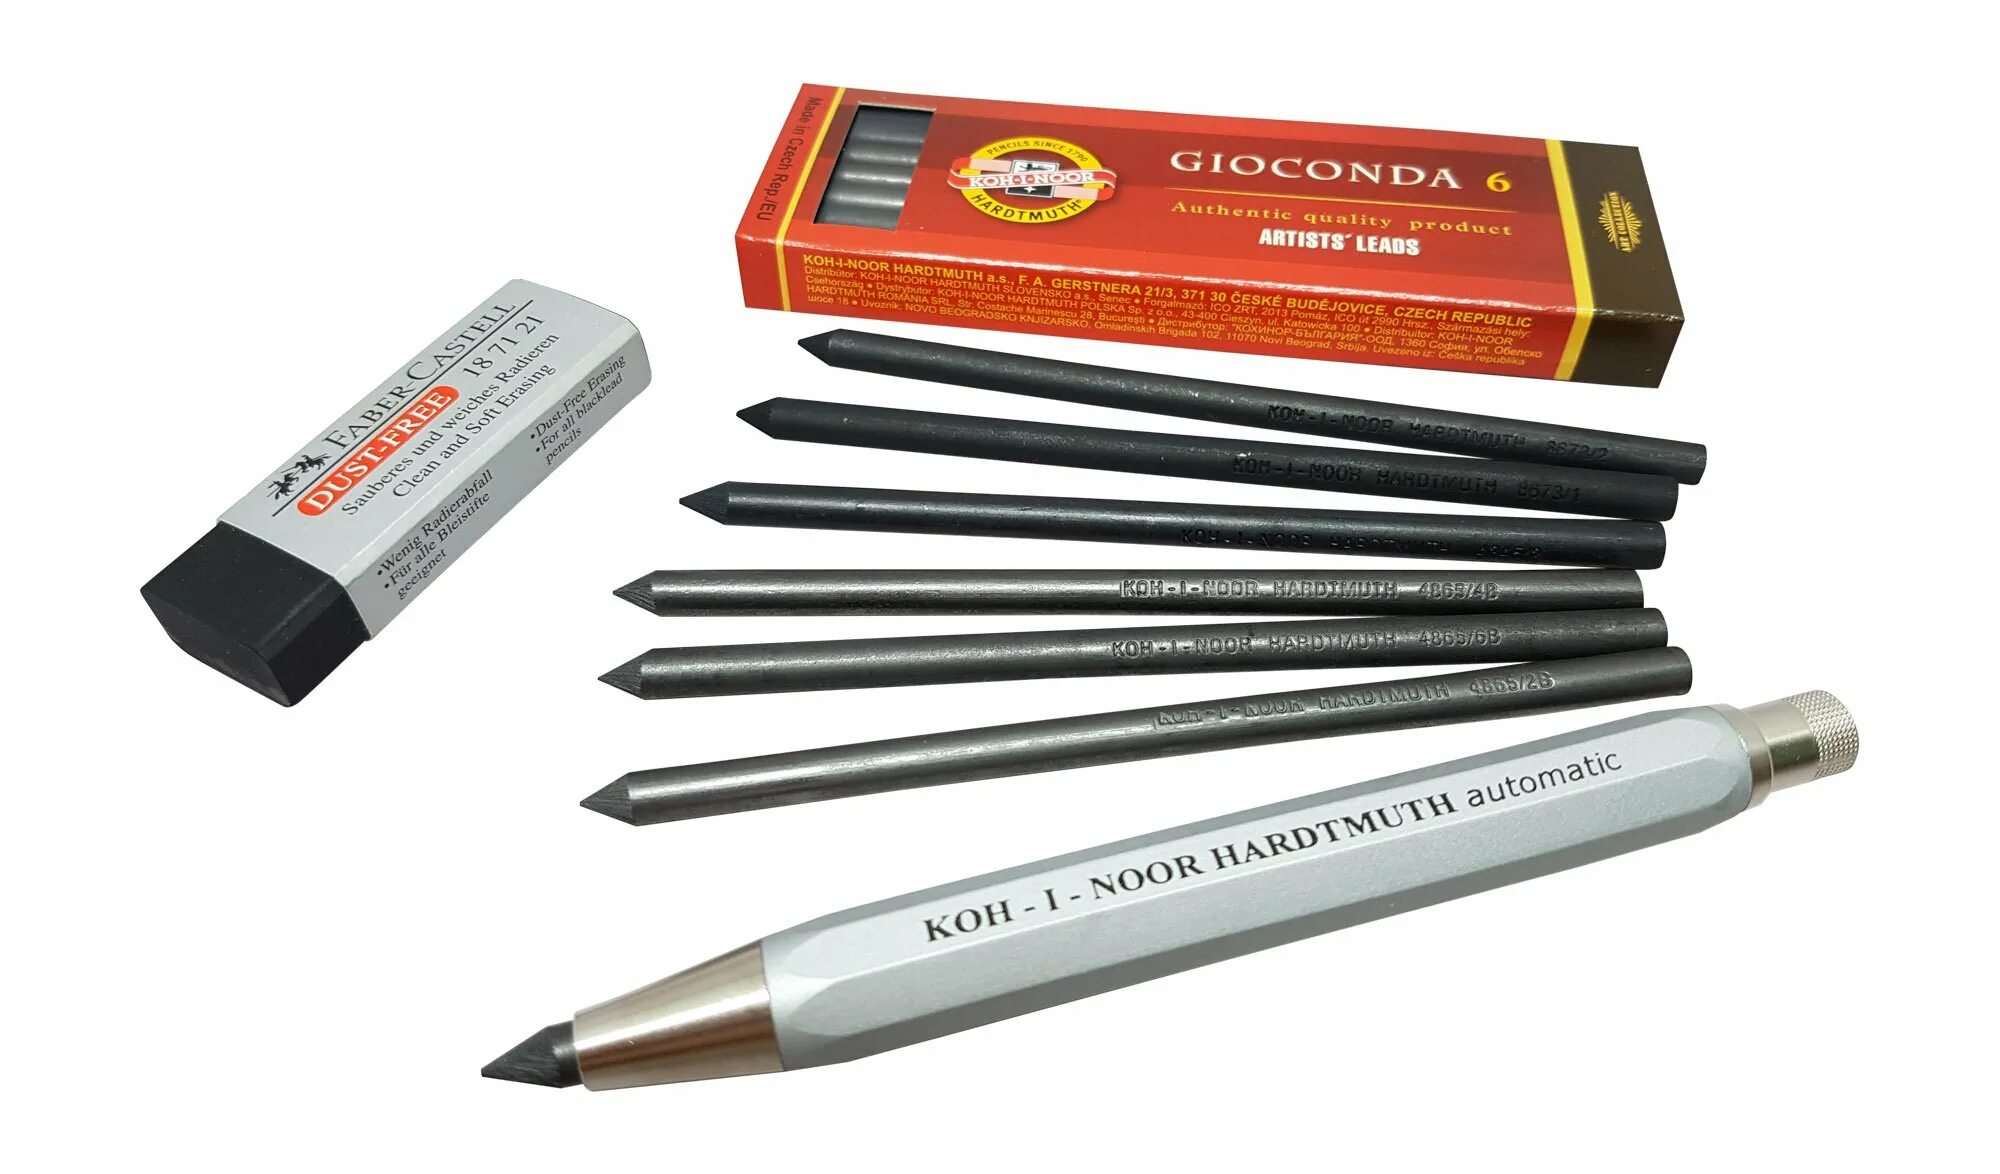 Карандаш 5 мм. Карандаш цанговый Koh- i-Noor Hardtmuth 5.6. Koh i Noor Hardtmuth 5.6. Koh-i-Noor механический карандаш цанговый versatil 5,6 мм. Koh-i-Noor versatil 3,2 mm.